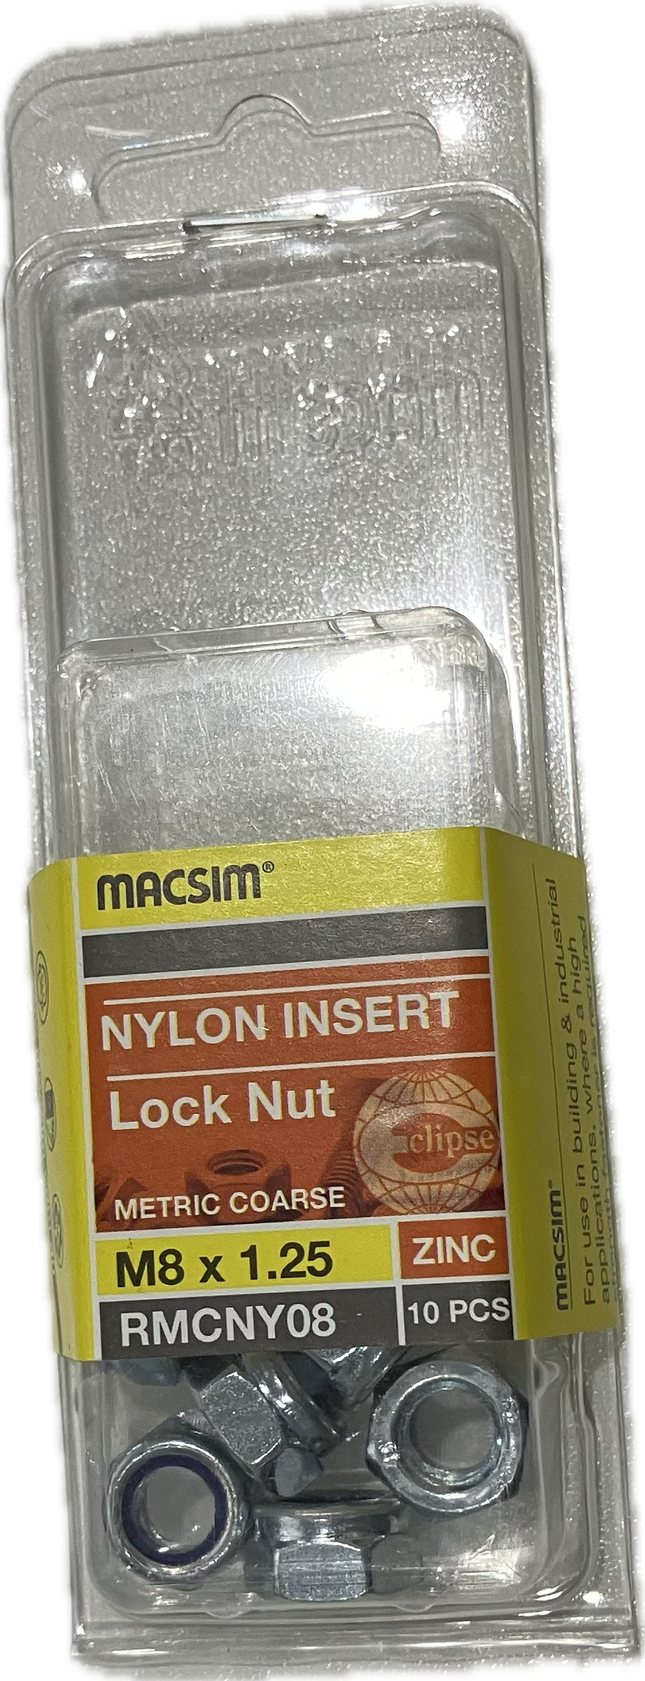 MACSIM HEX HEAD MATRIC COARSE NYLON INSERT ZINC PLATED M8 LOCK NUT (BLISTER PACK OF 10)